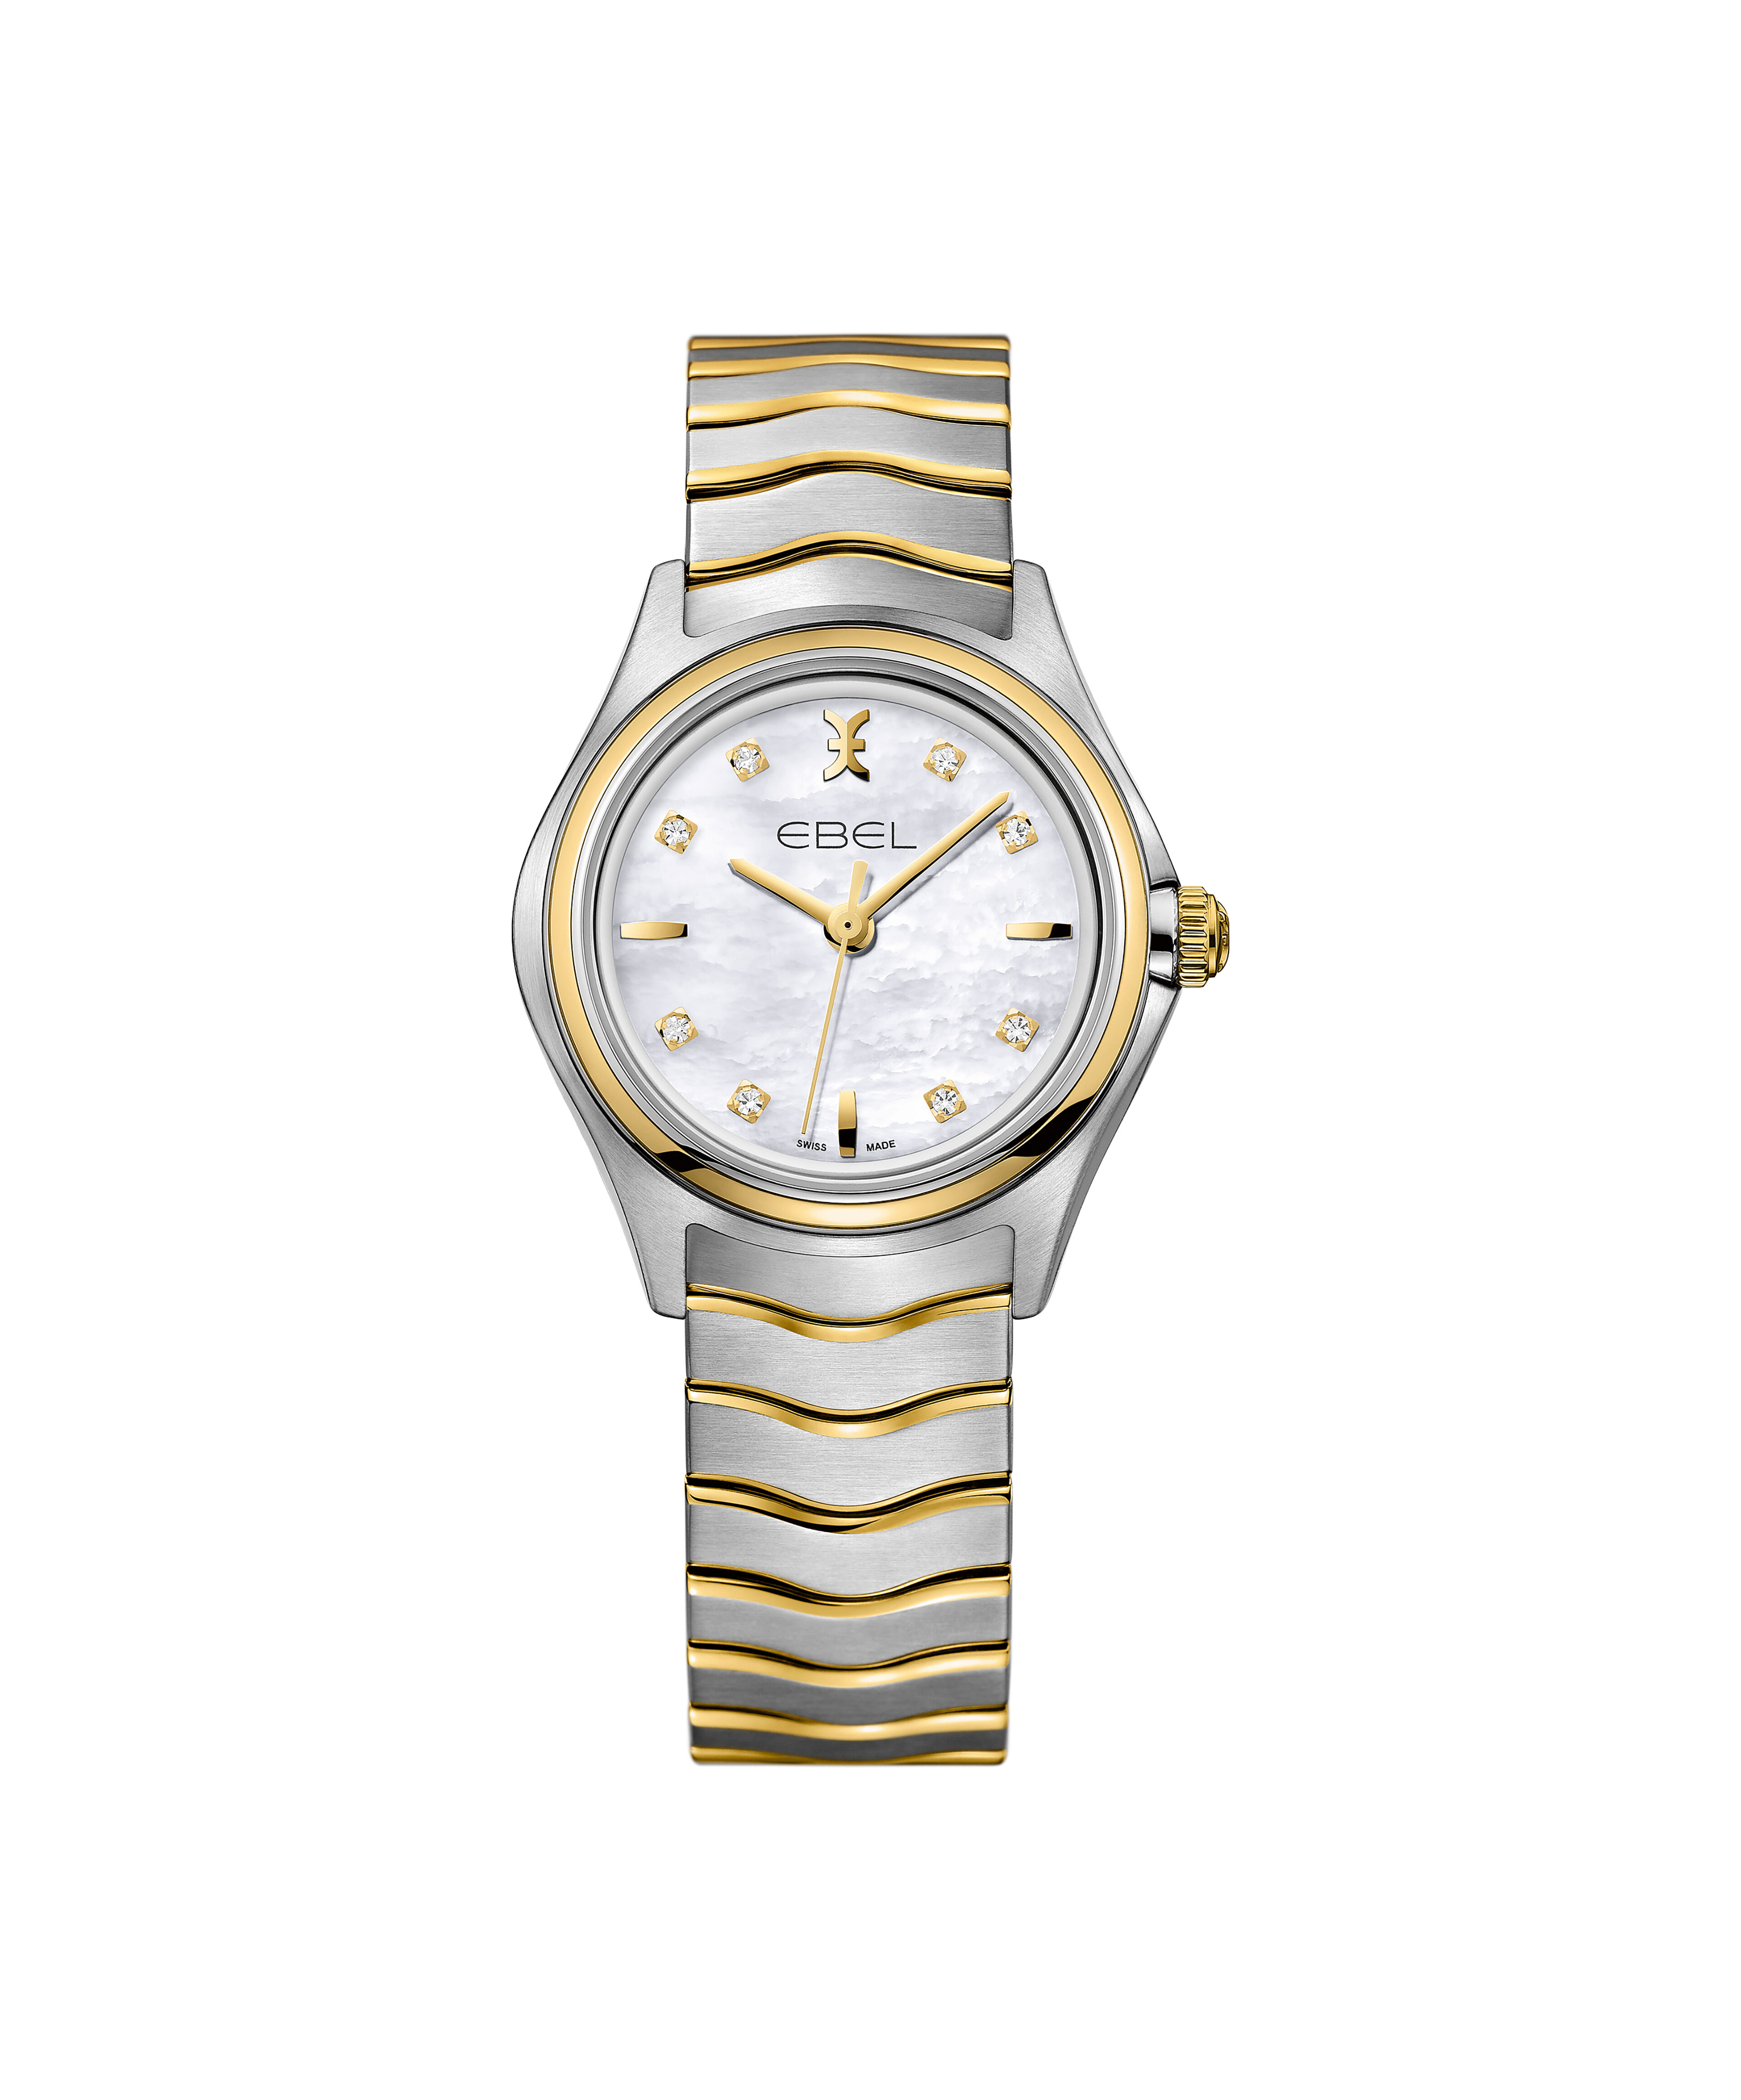 Rolex Replica Watches High Quality